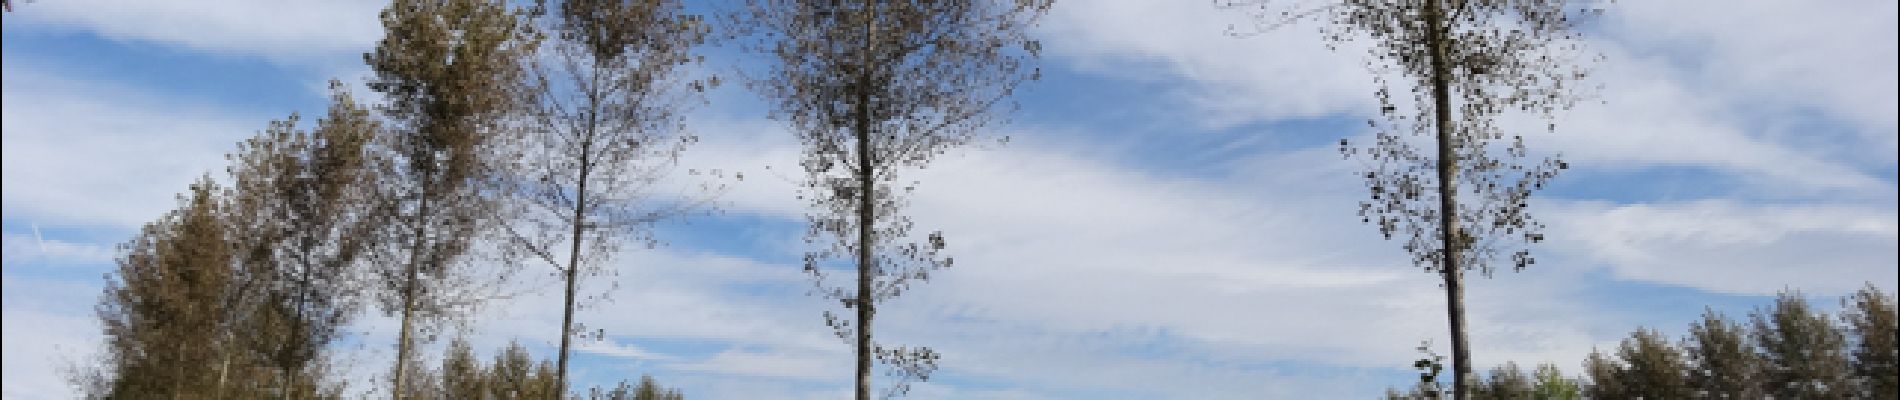 Point of interest Herve - Etonnant alignement d'arbres - Photo